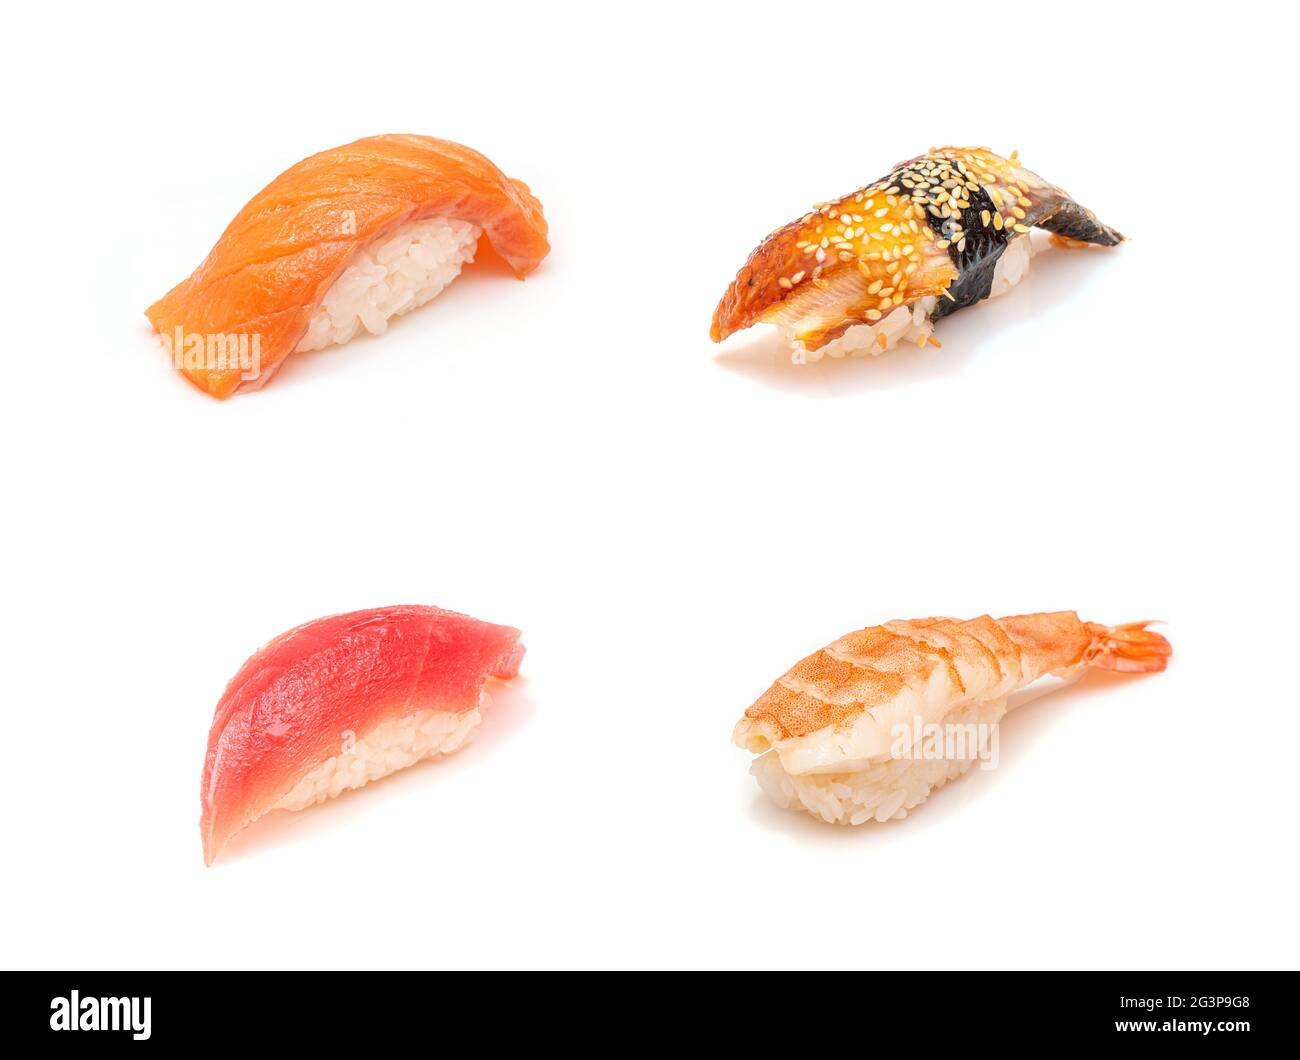 https://c8.alamy.com/comp/2G3P9G8/set-of-4-sushi-isolated-on-white-salmon-sake-eel-unagi-prawn-ebi-tuna-maguro-sushi-set-2G3P9G8.jpg